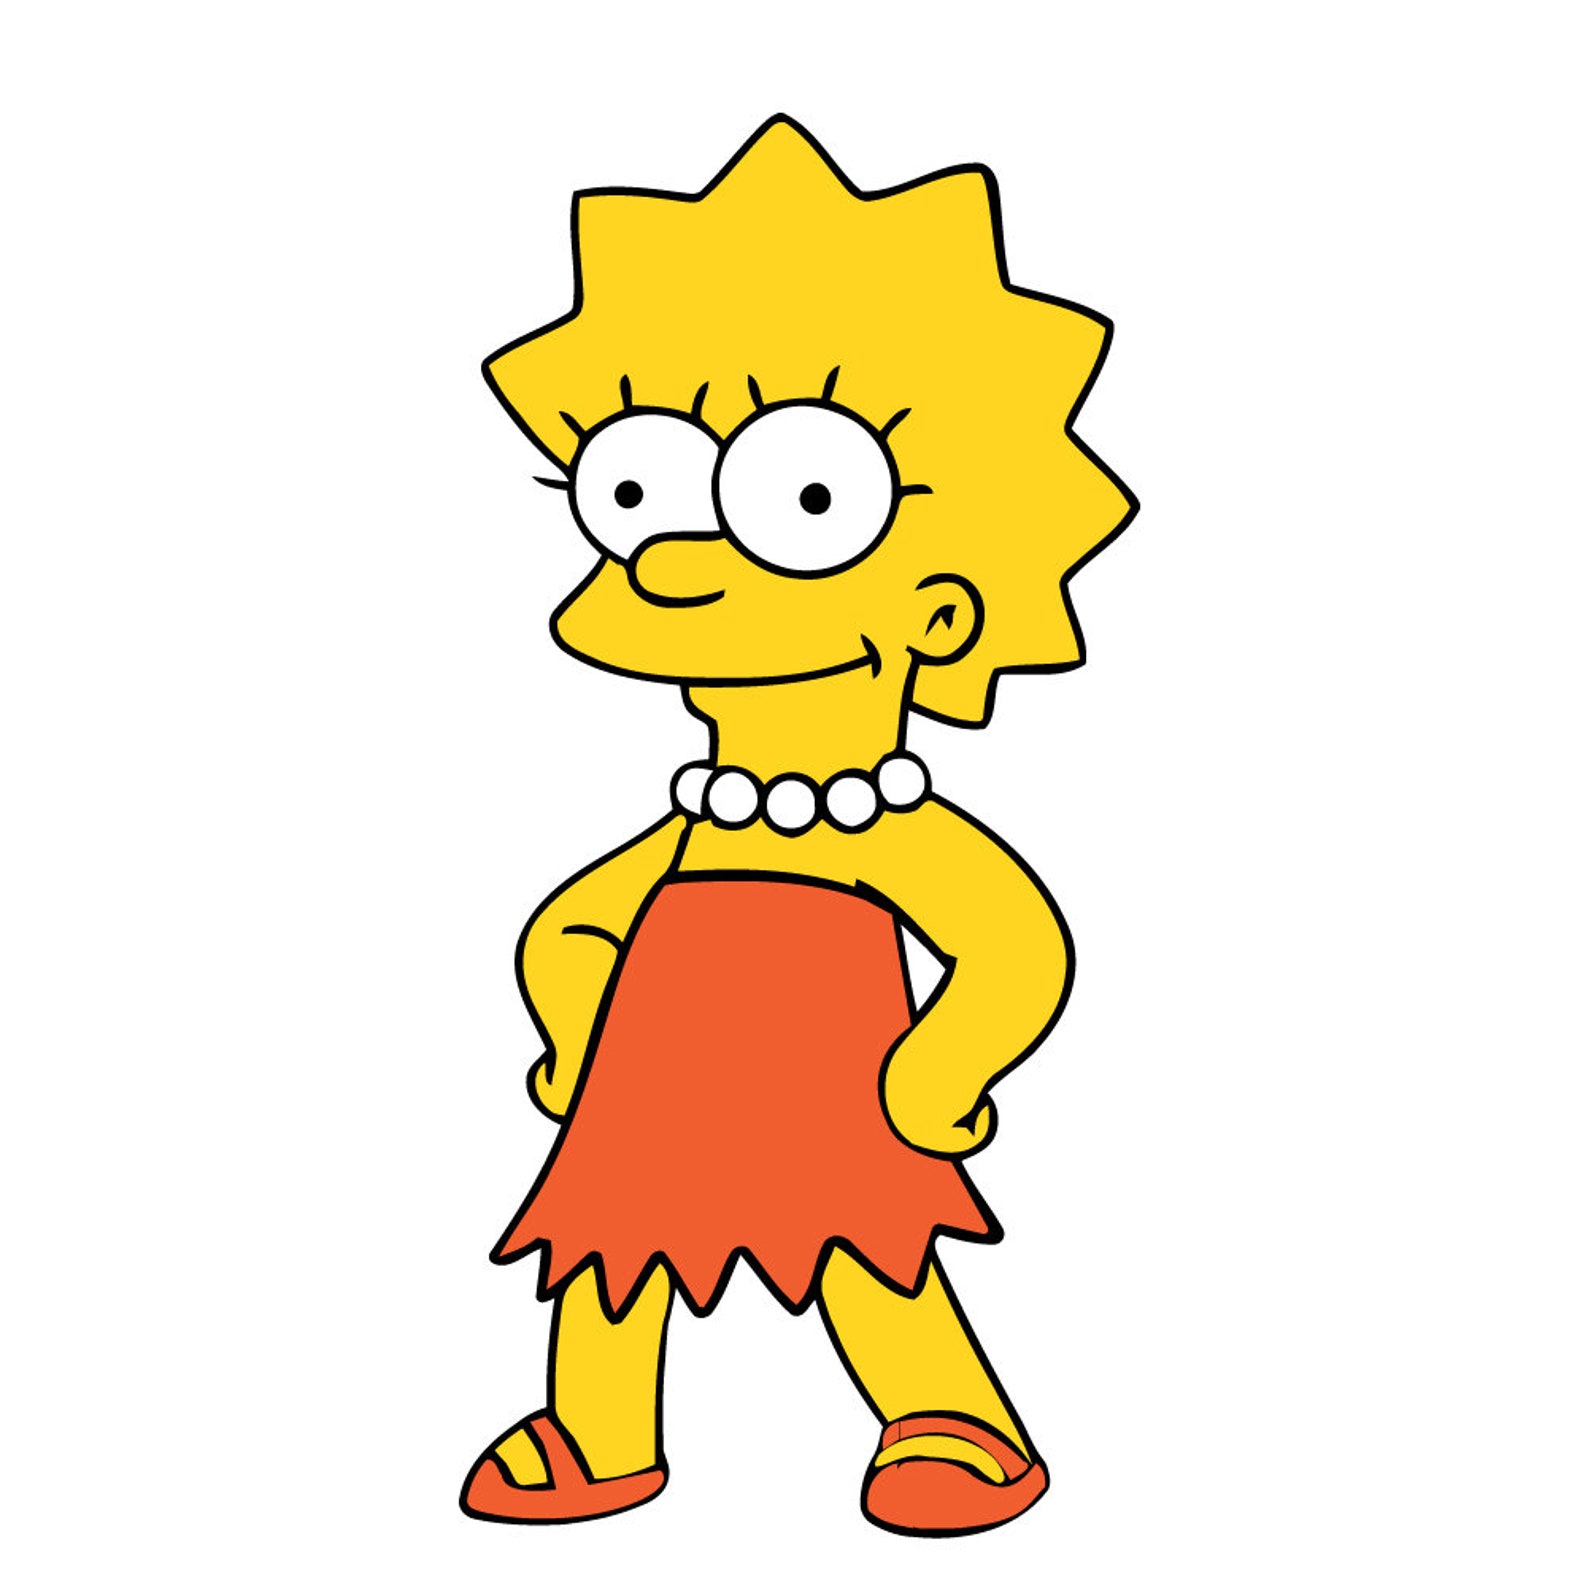 Lisa Simpson from The Simpsons Vinyl Die Cut Decal Sticker | Etsy